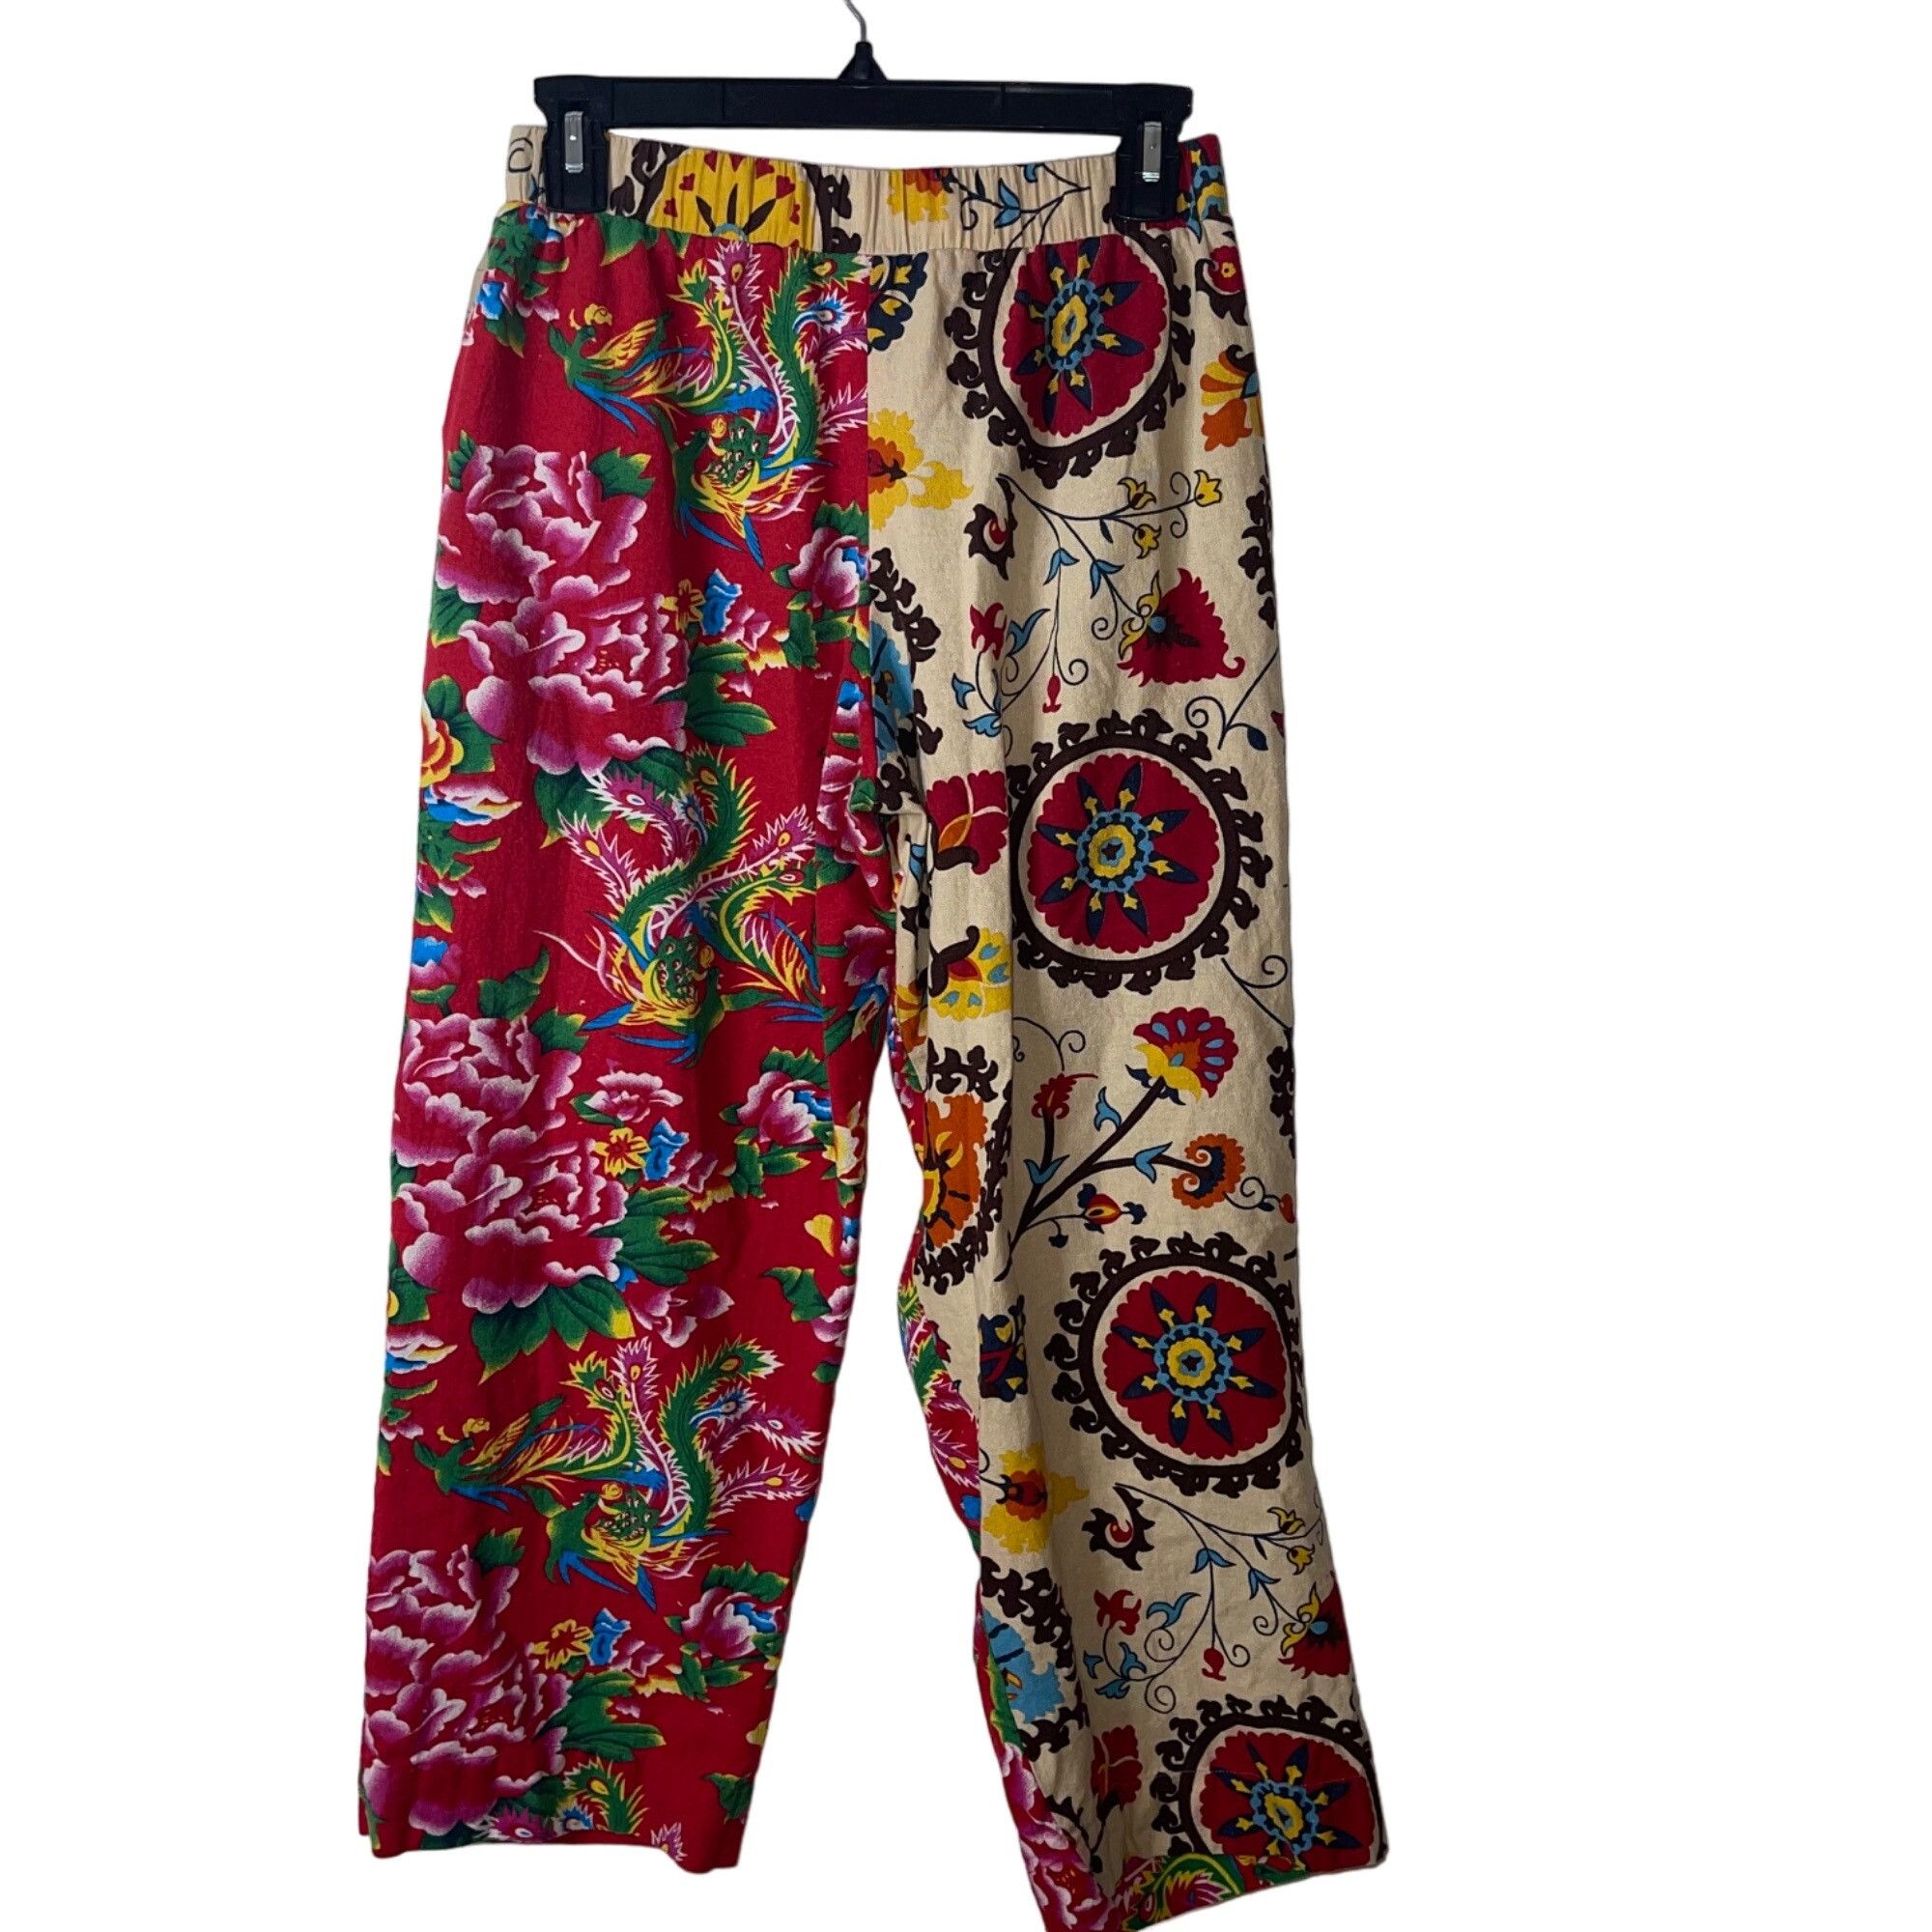 Other Benjimu Womens Pajama Set Size Small Multicolor Mixed Print Size ONE SIZE - 6 Thumbnail